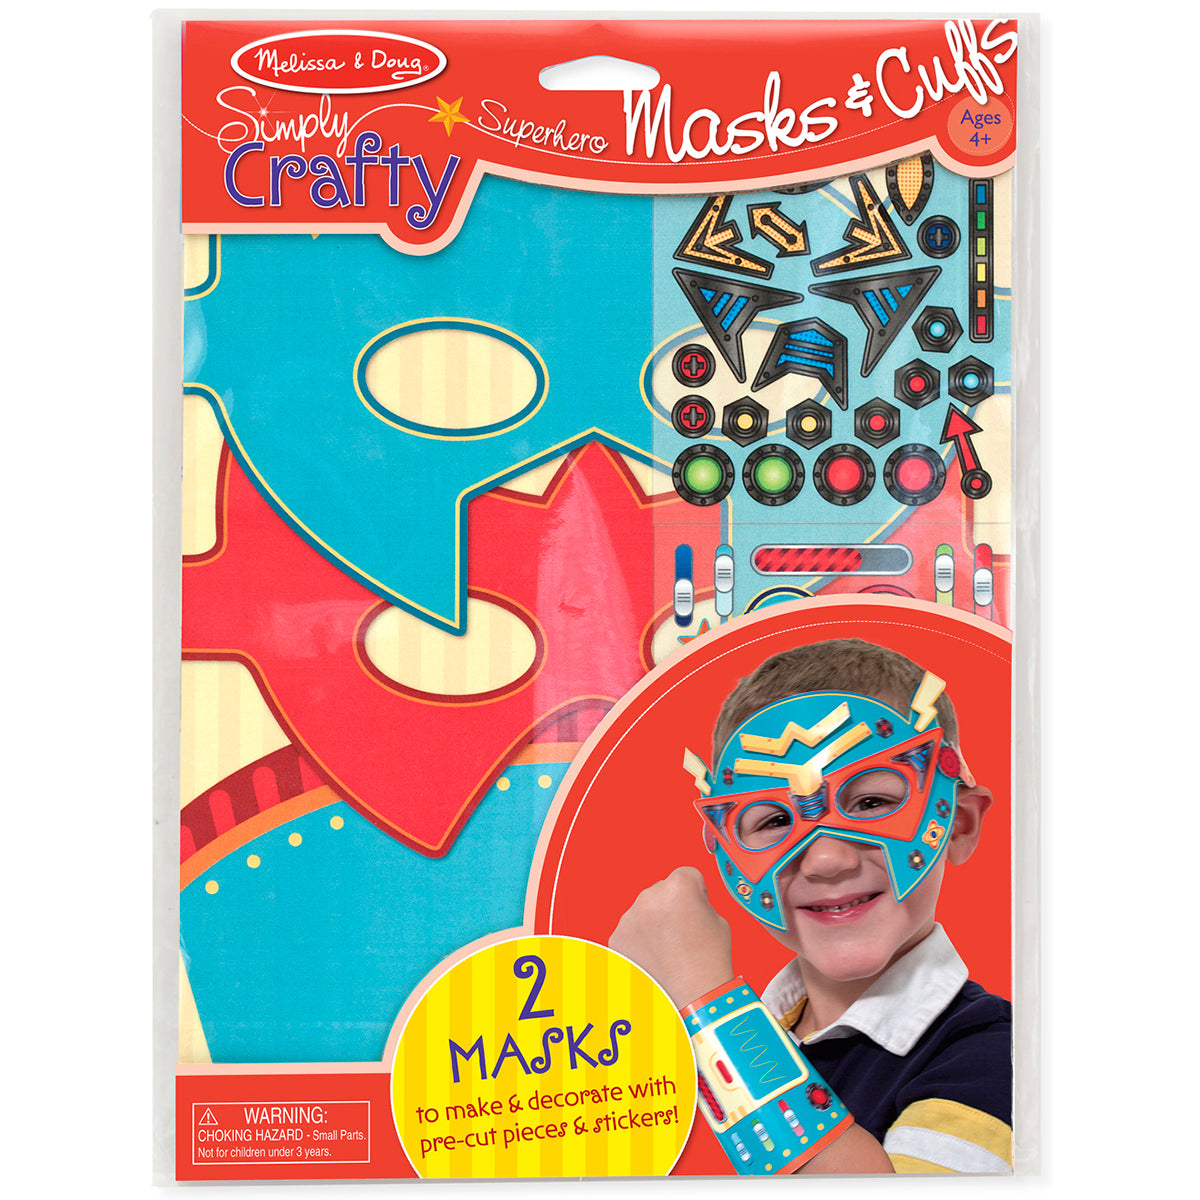 Simply Crafty Masks | Melissa & Doug